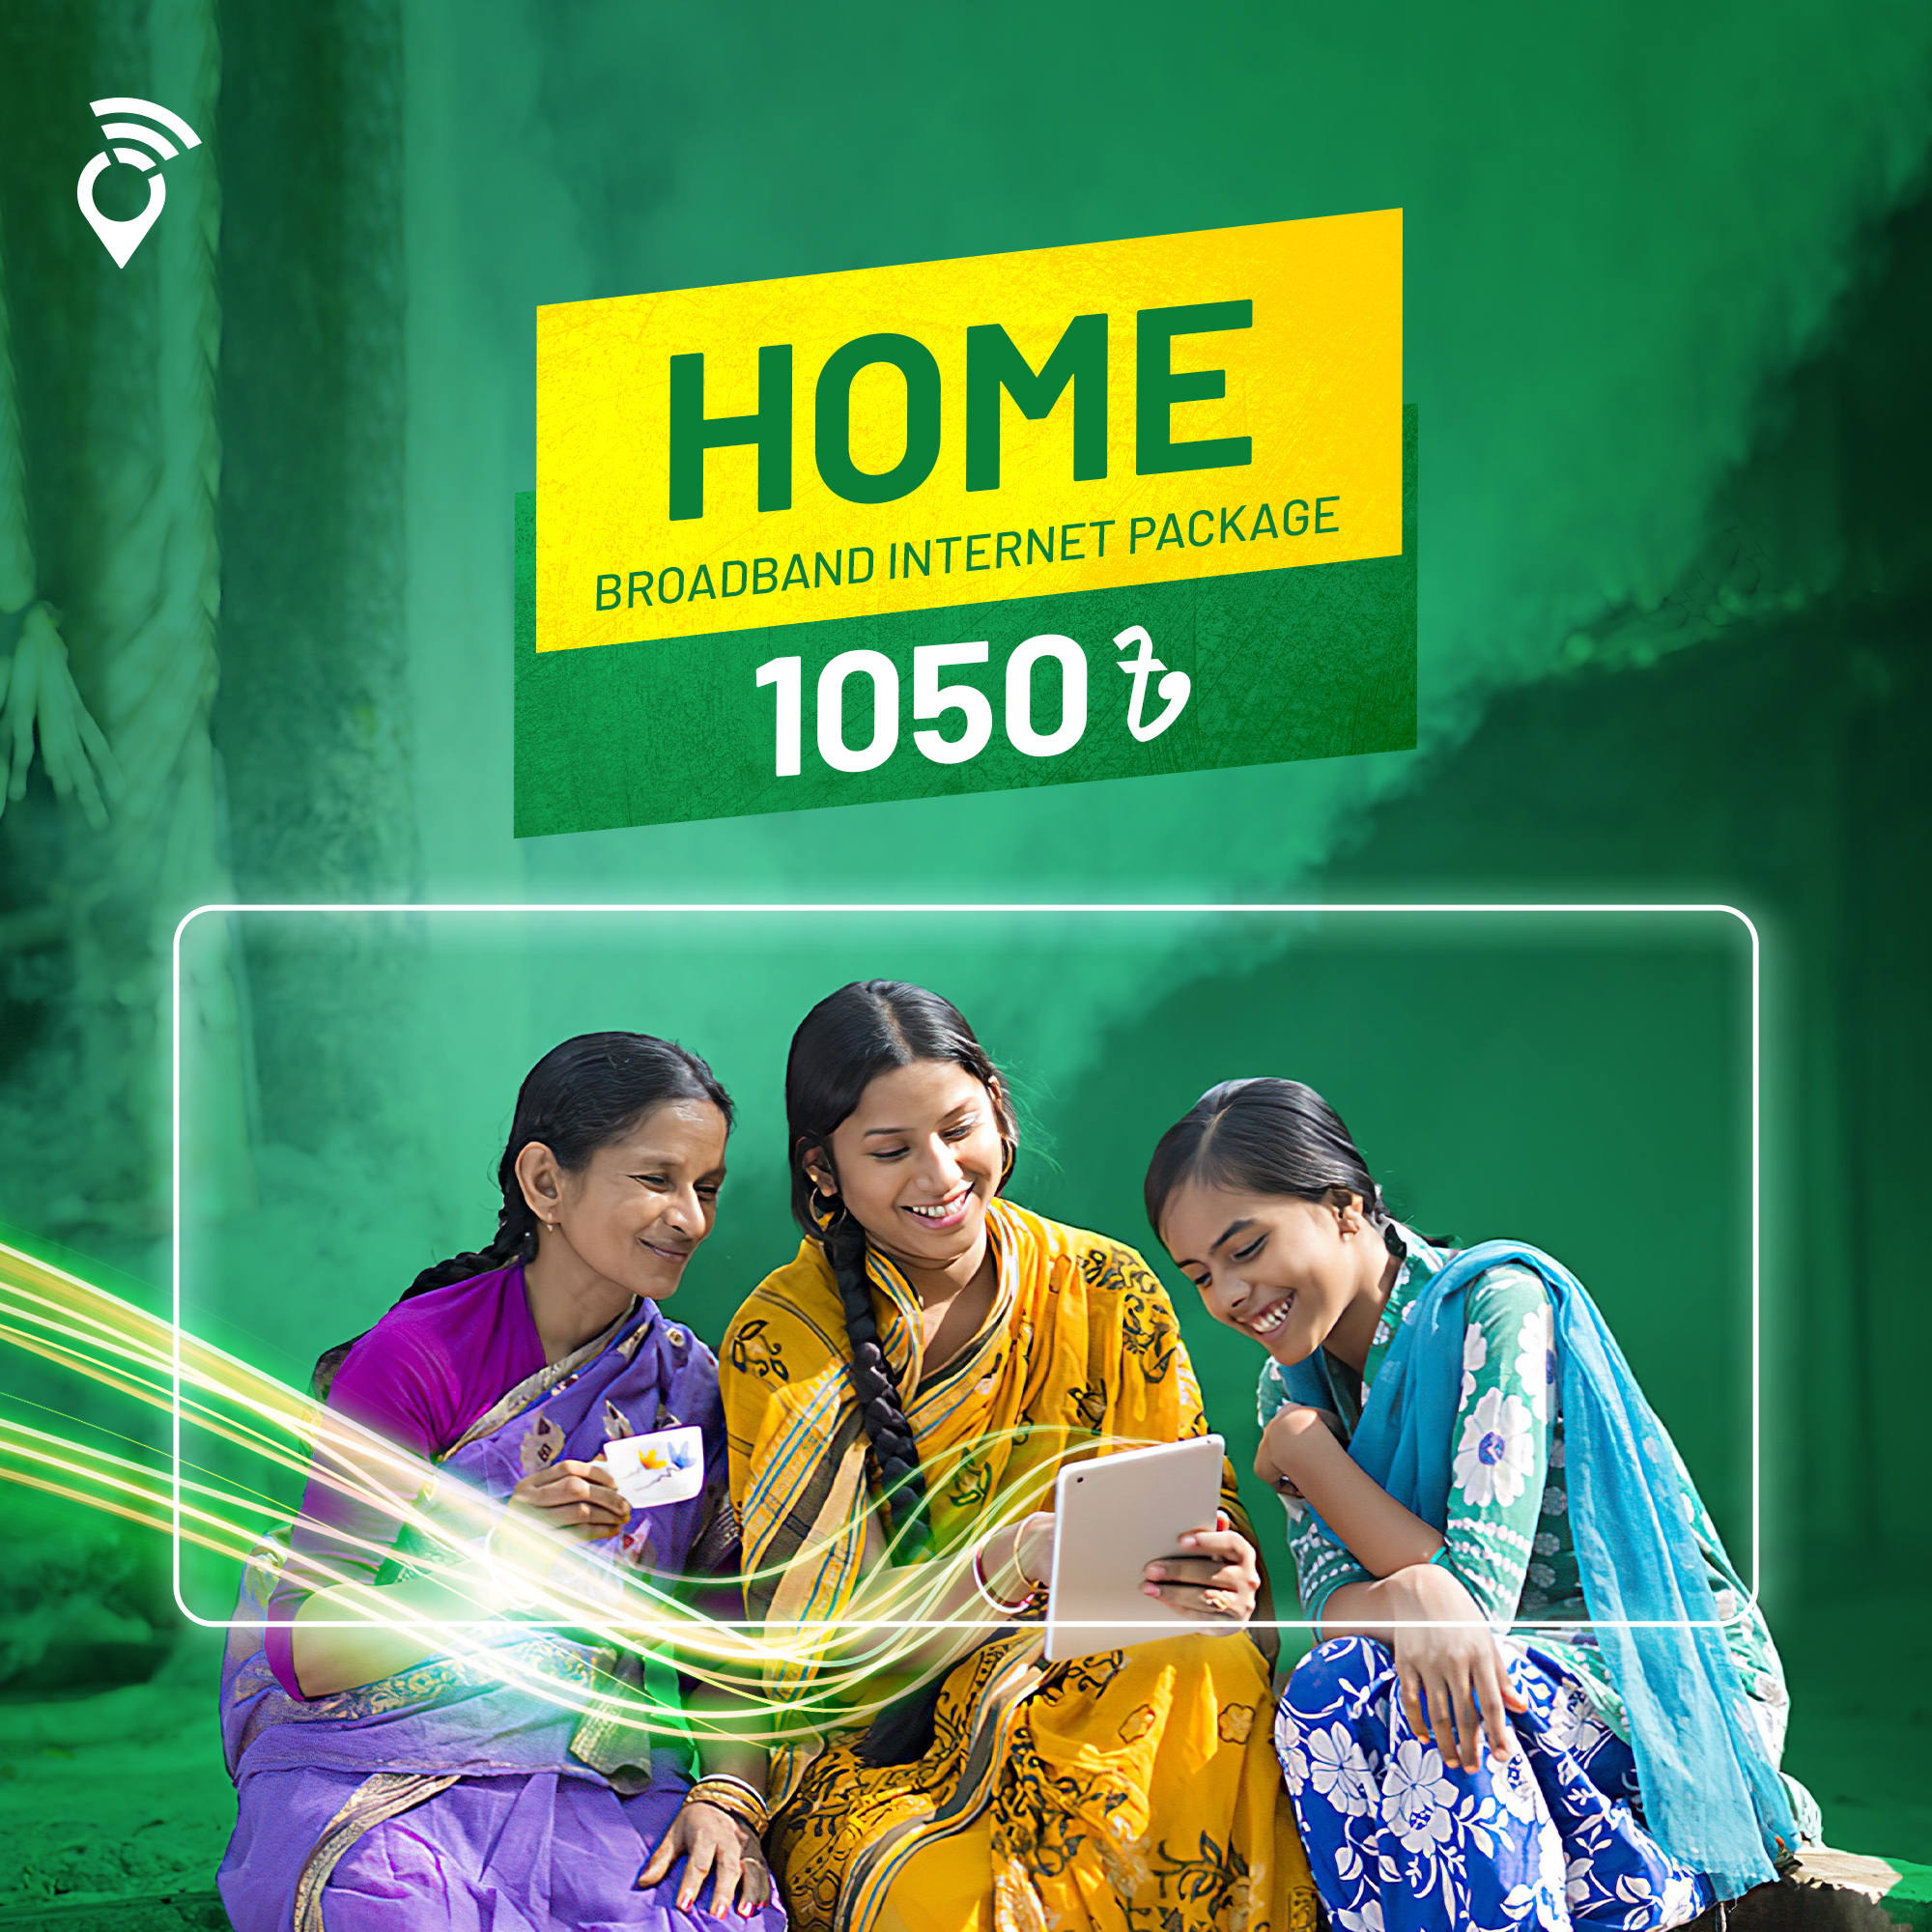 Best Home Broadband internet package in Bangladesh